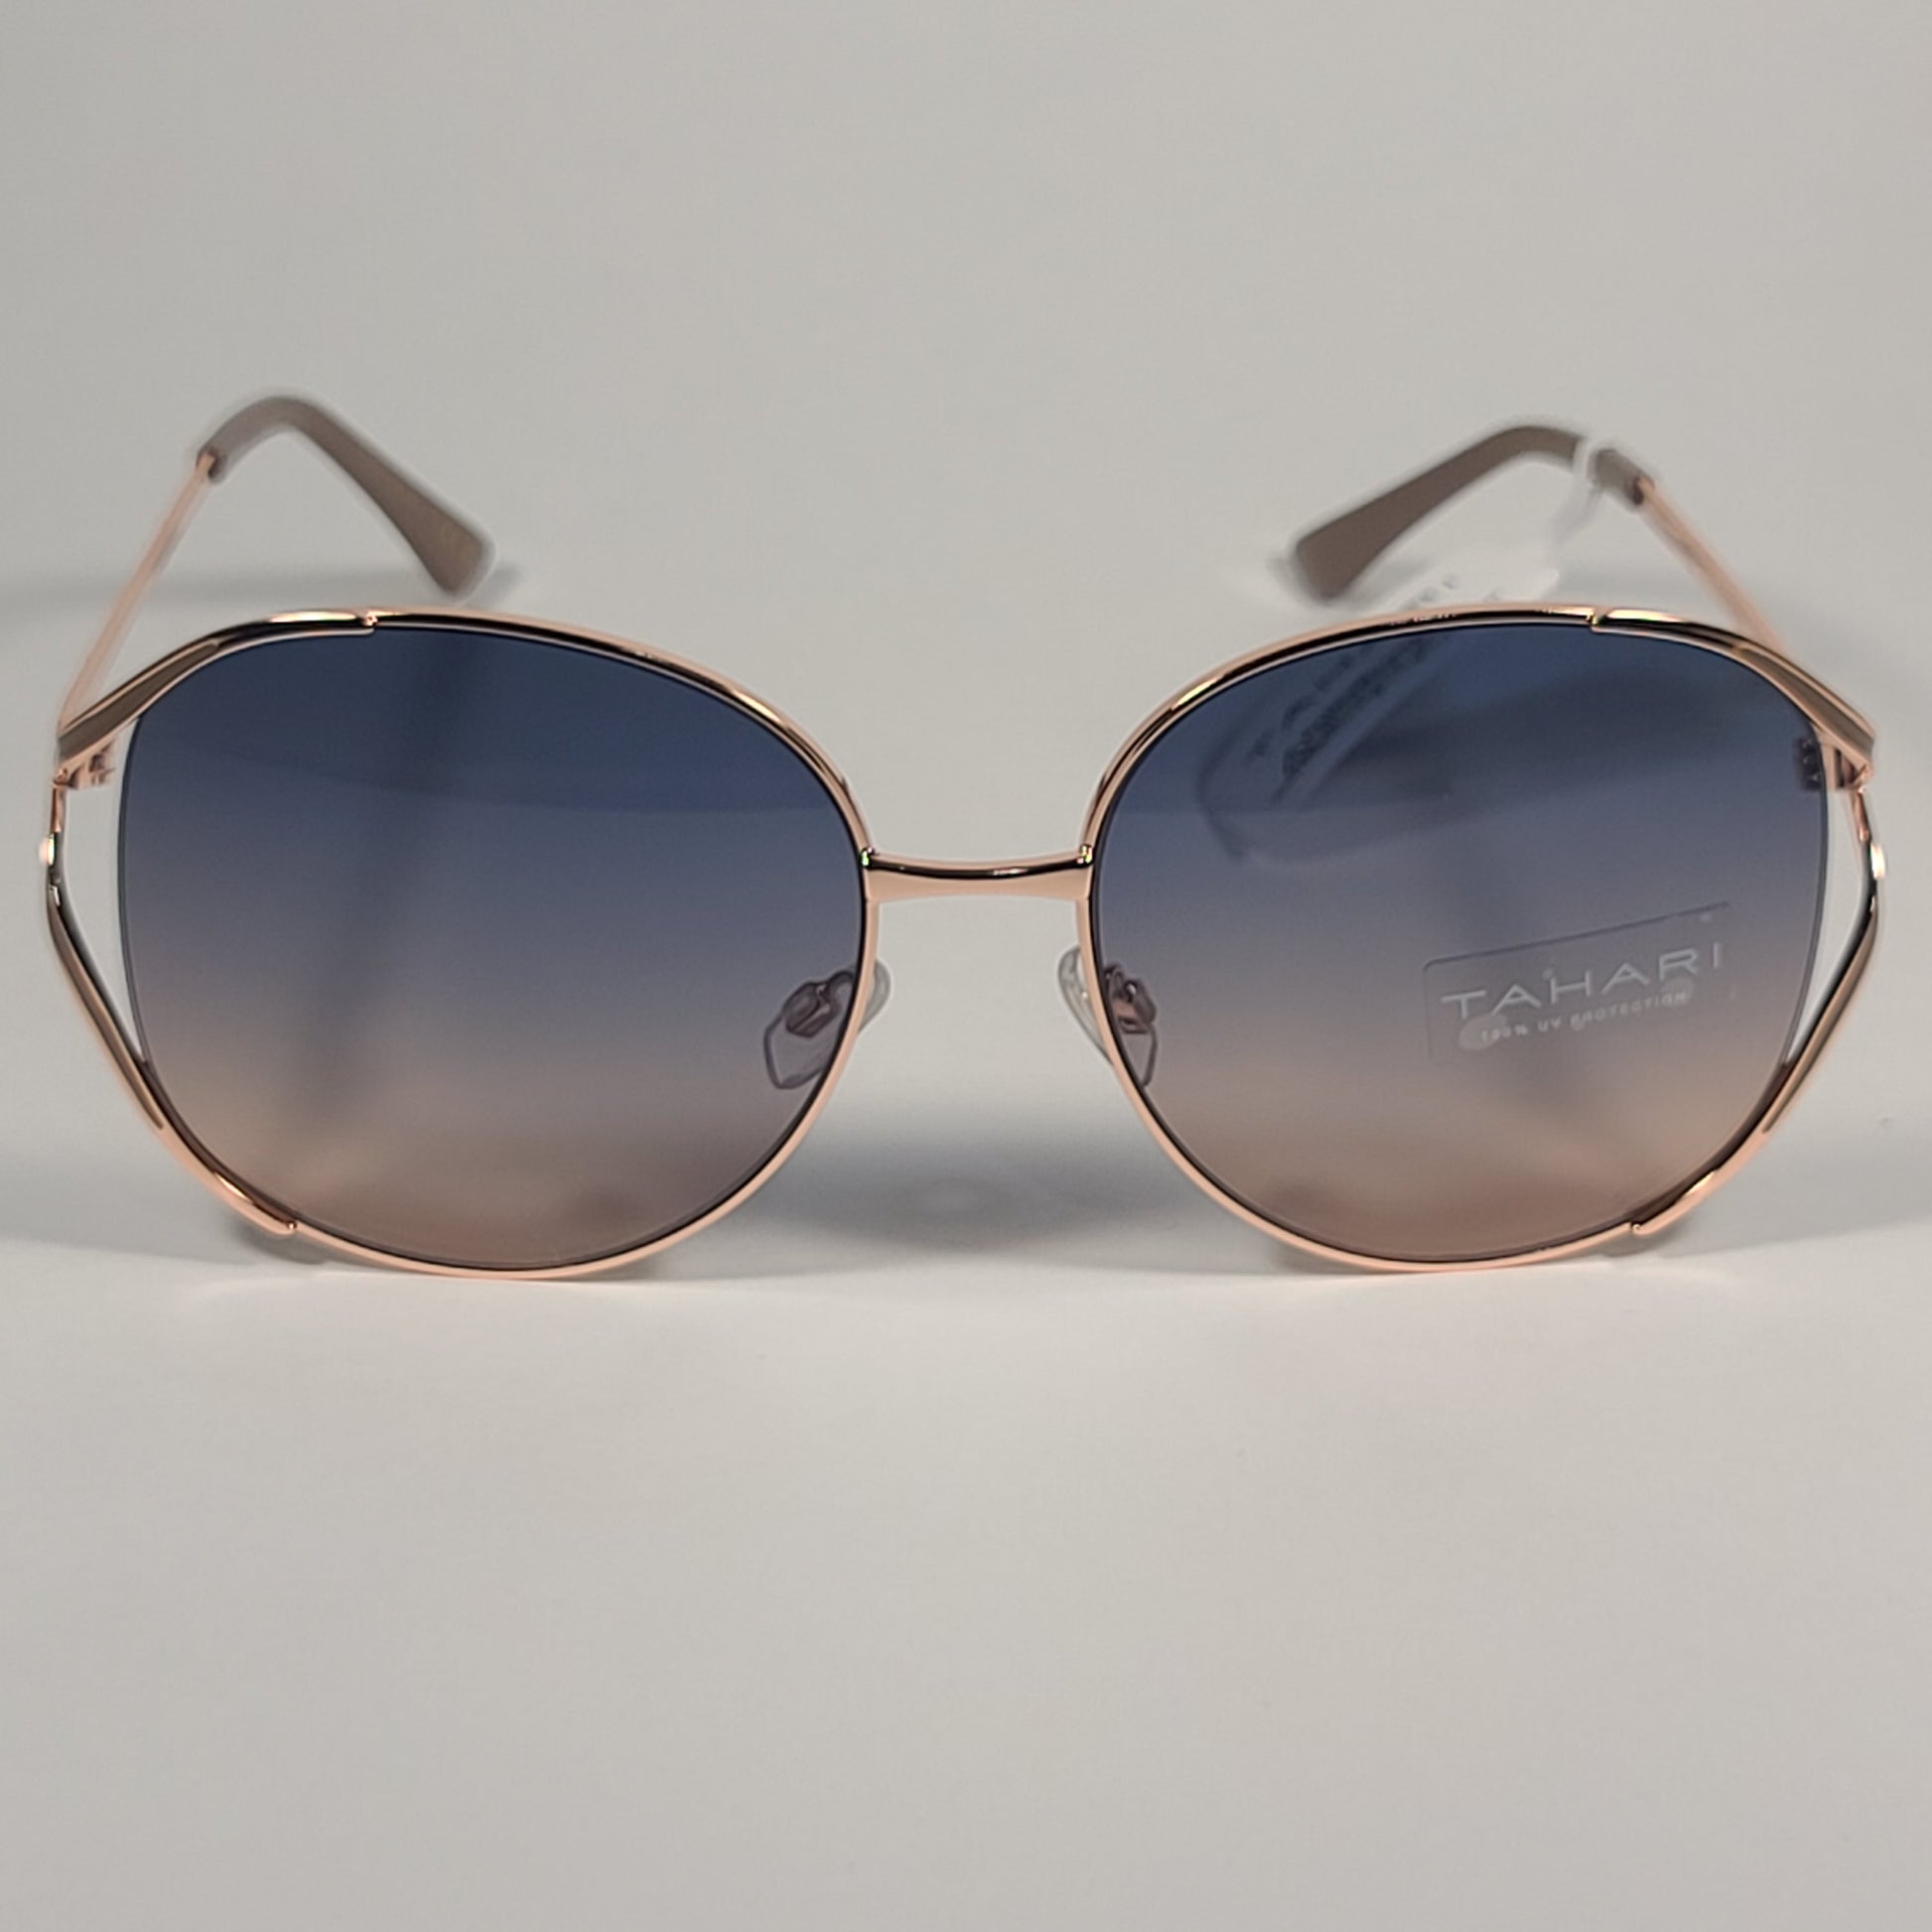 Tahari Oversized Sunglasses Nude Rose Gold Frame Rose Gradient Lens TH875 RGND - Sunglasses